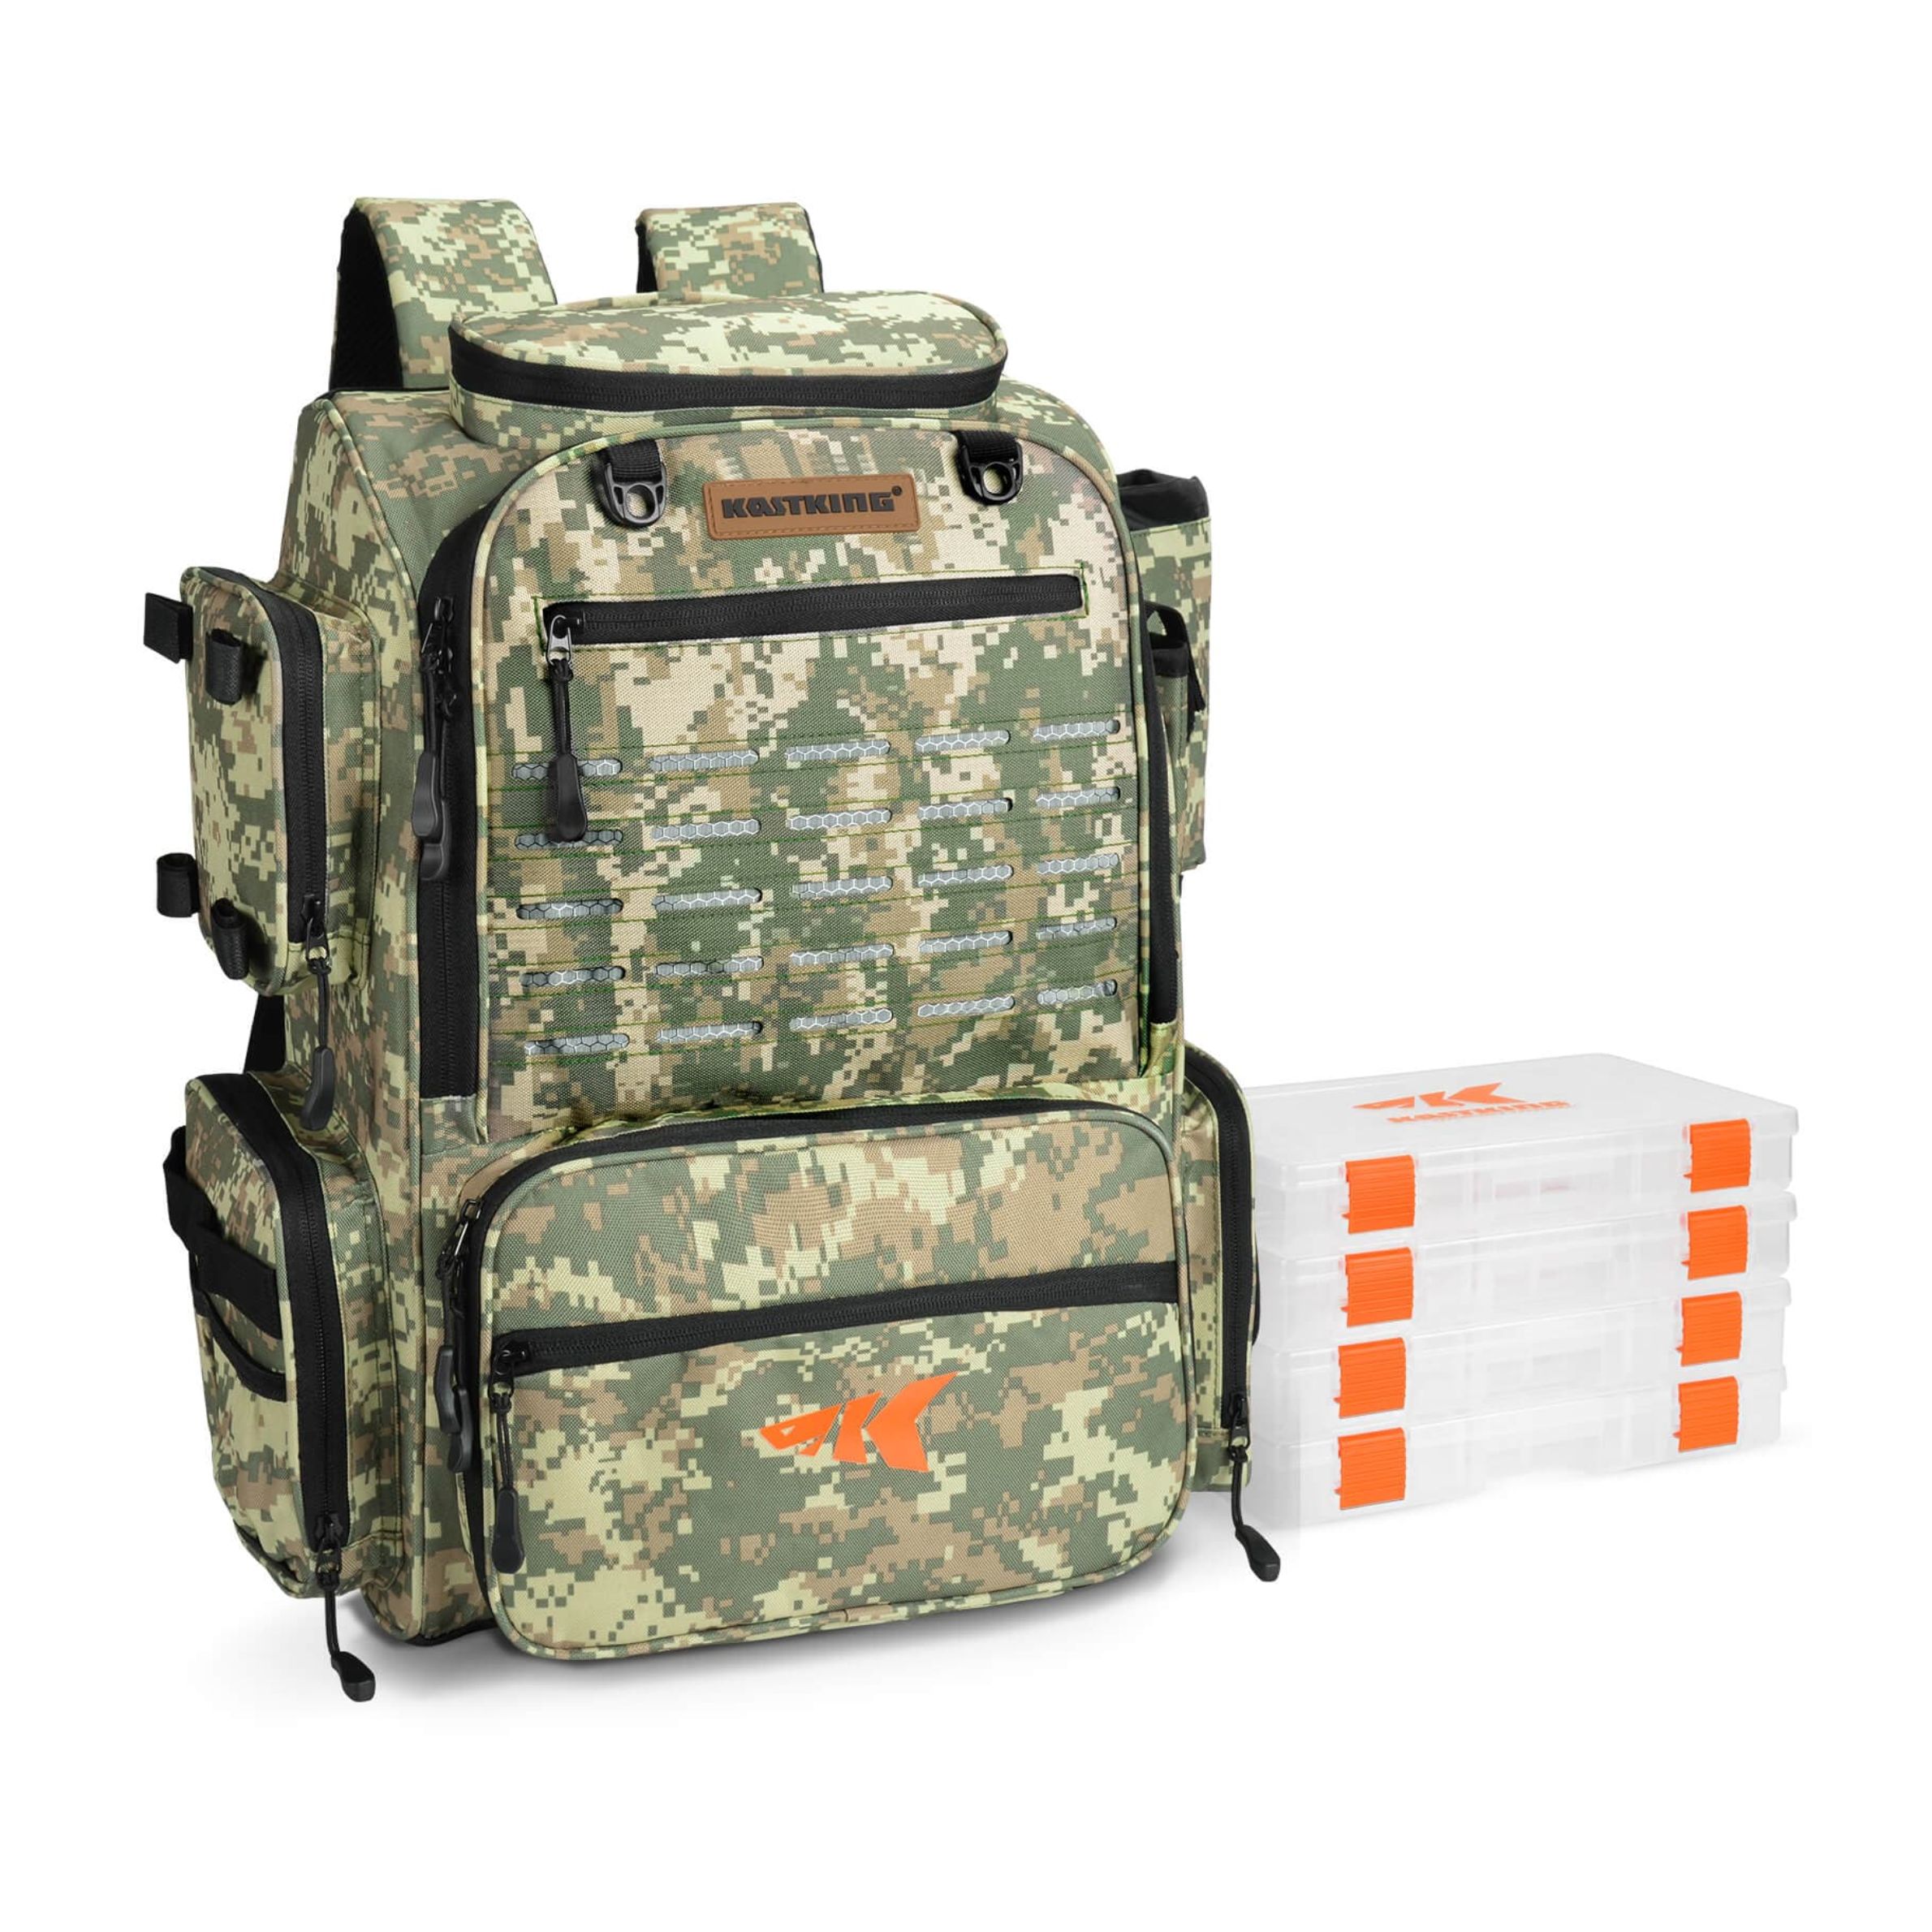 KastKing Fishing Tackle Backpack with 4 Tackle Box